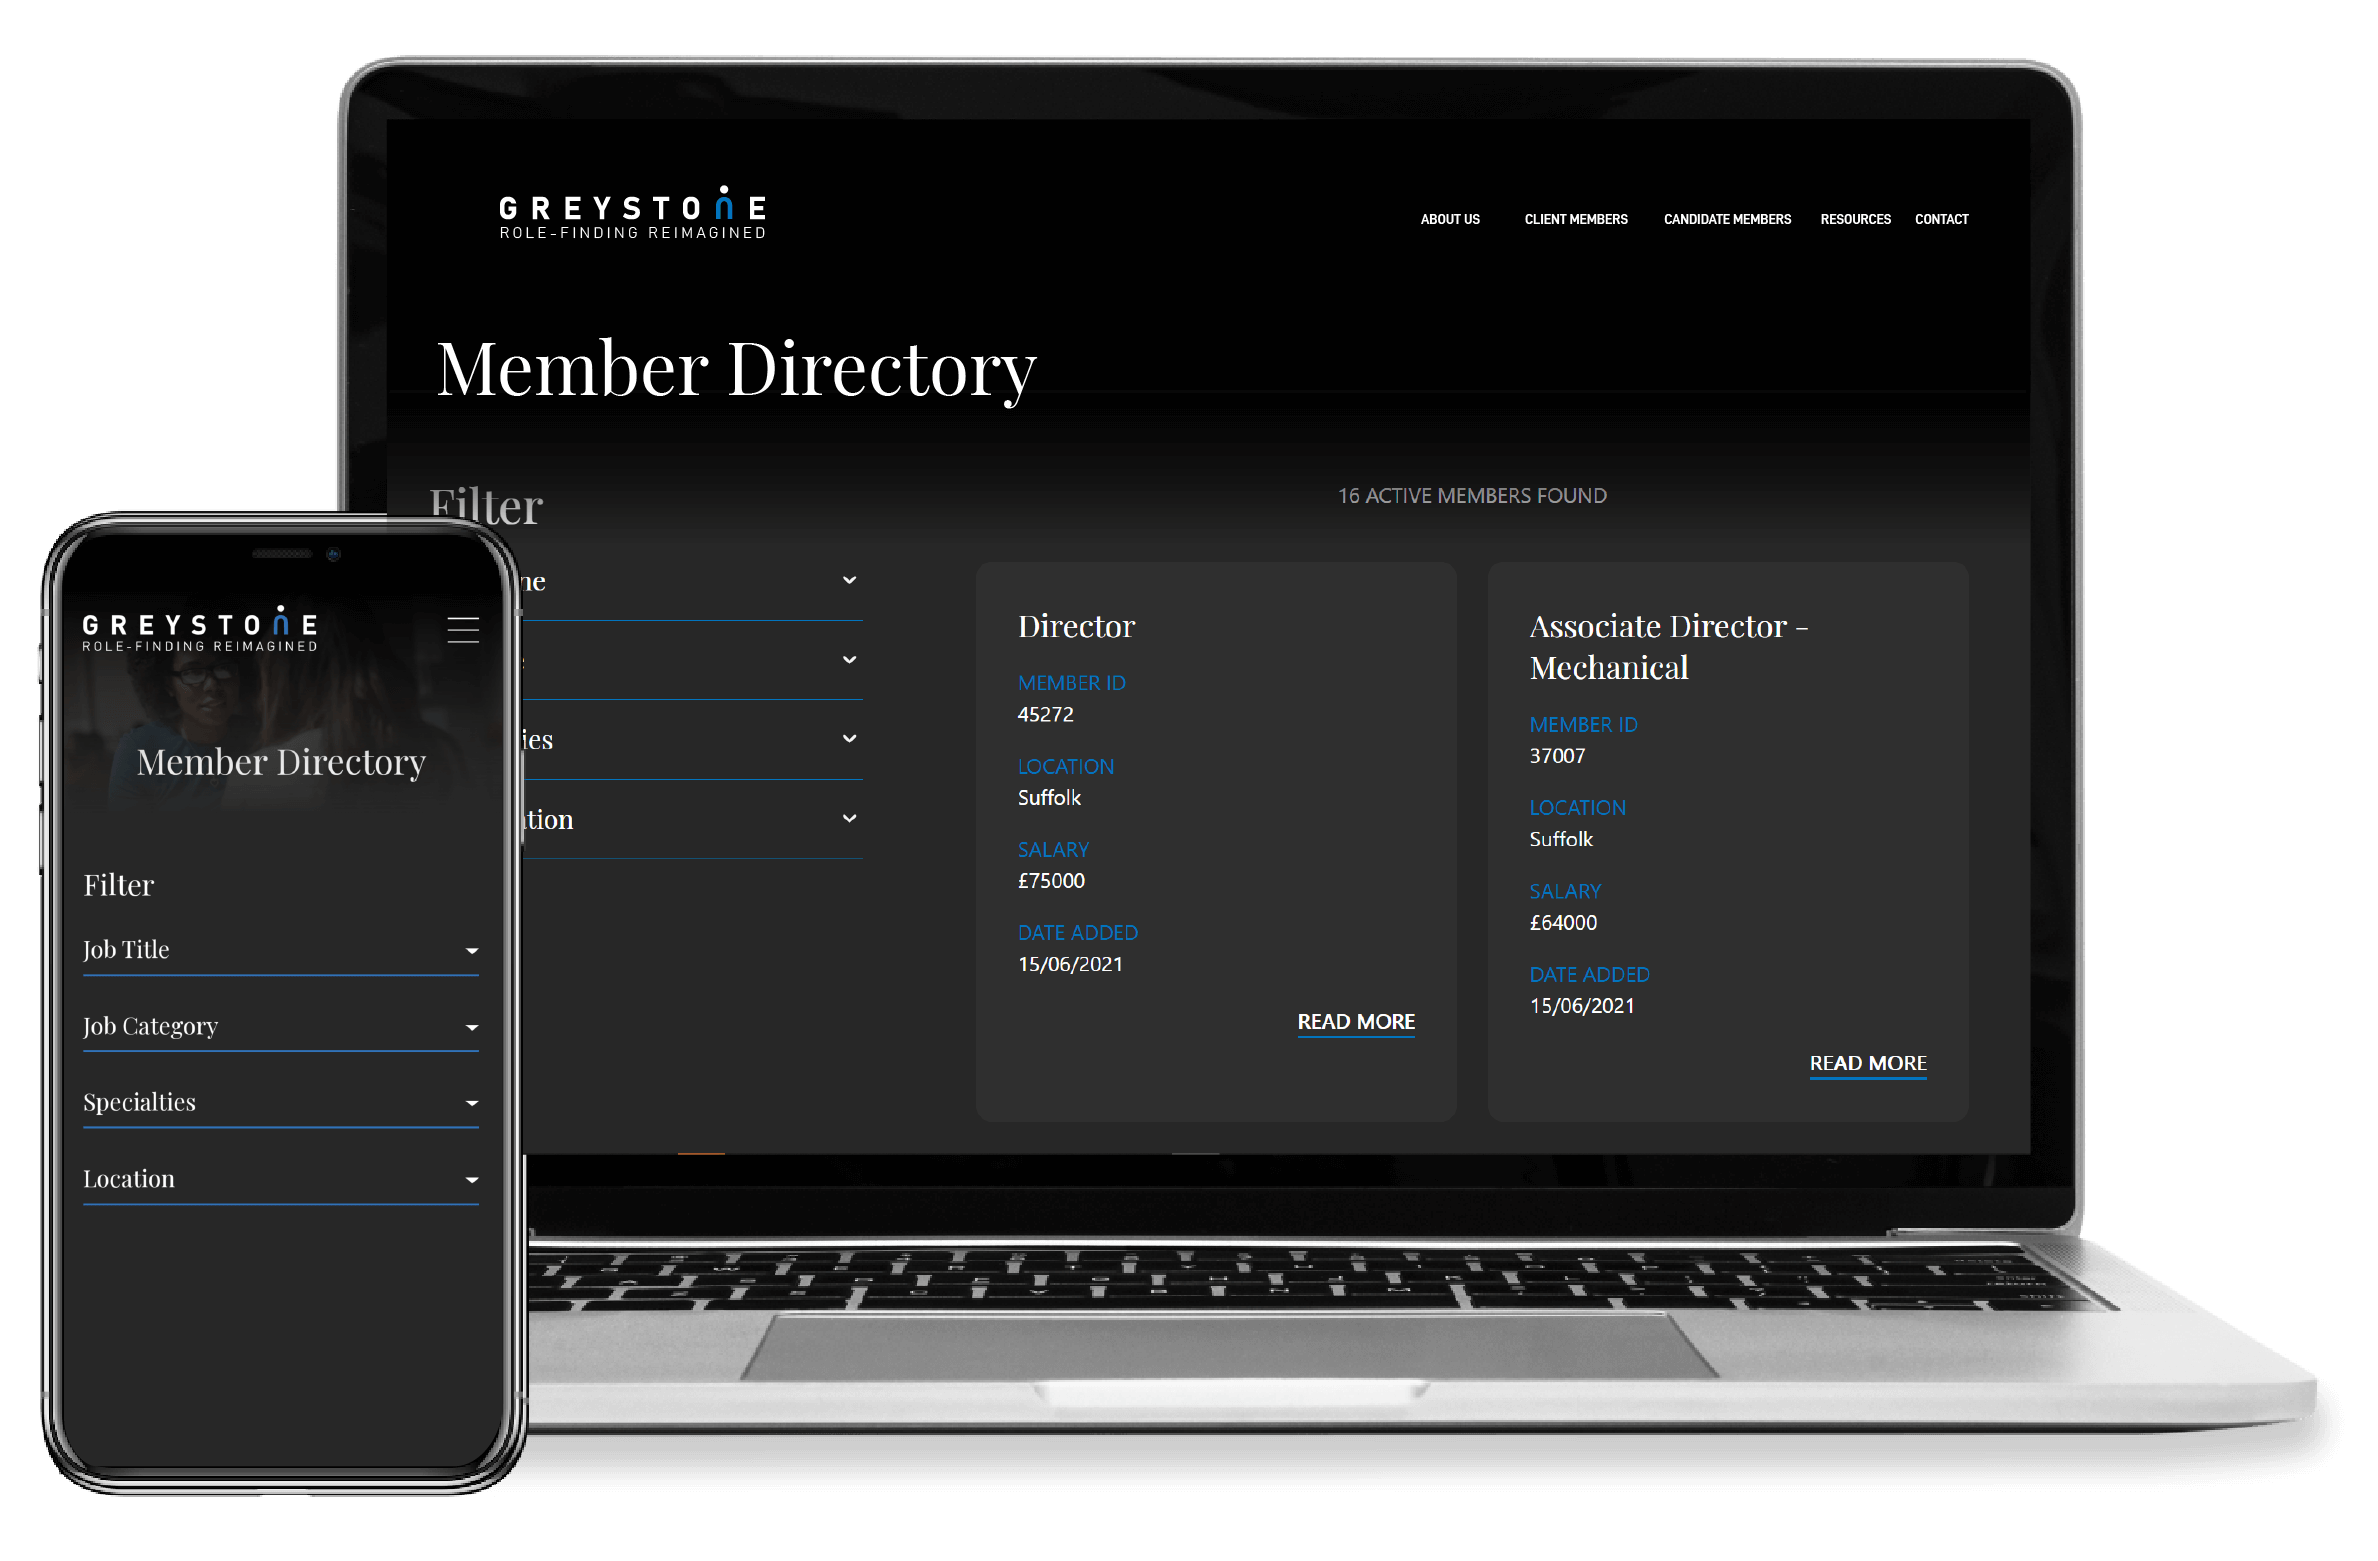 Member Directory on Laptop/Smart Phone